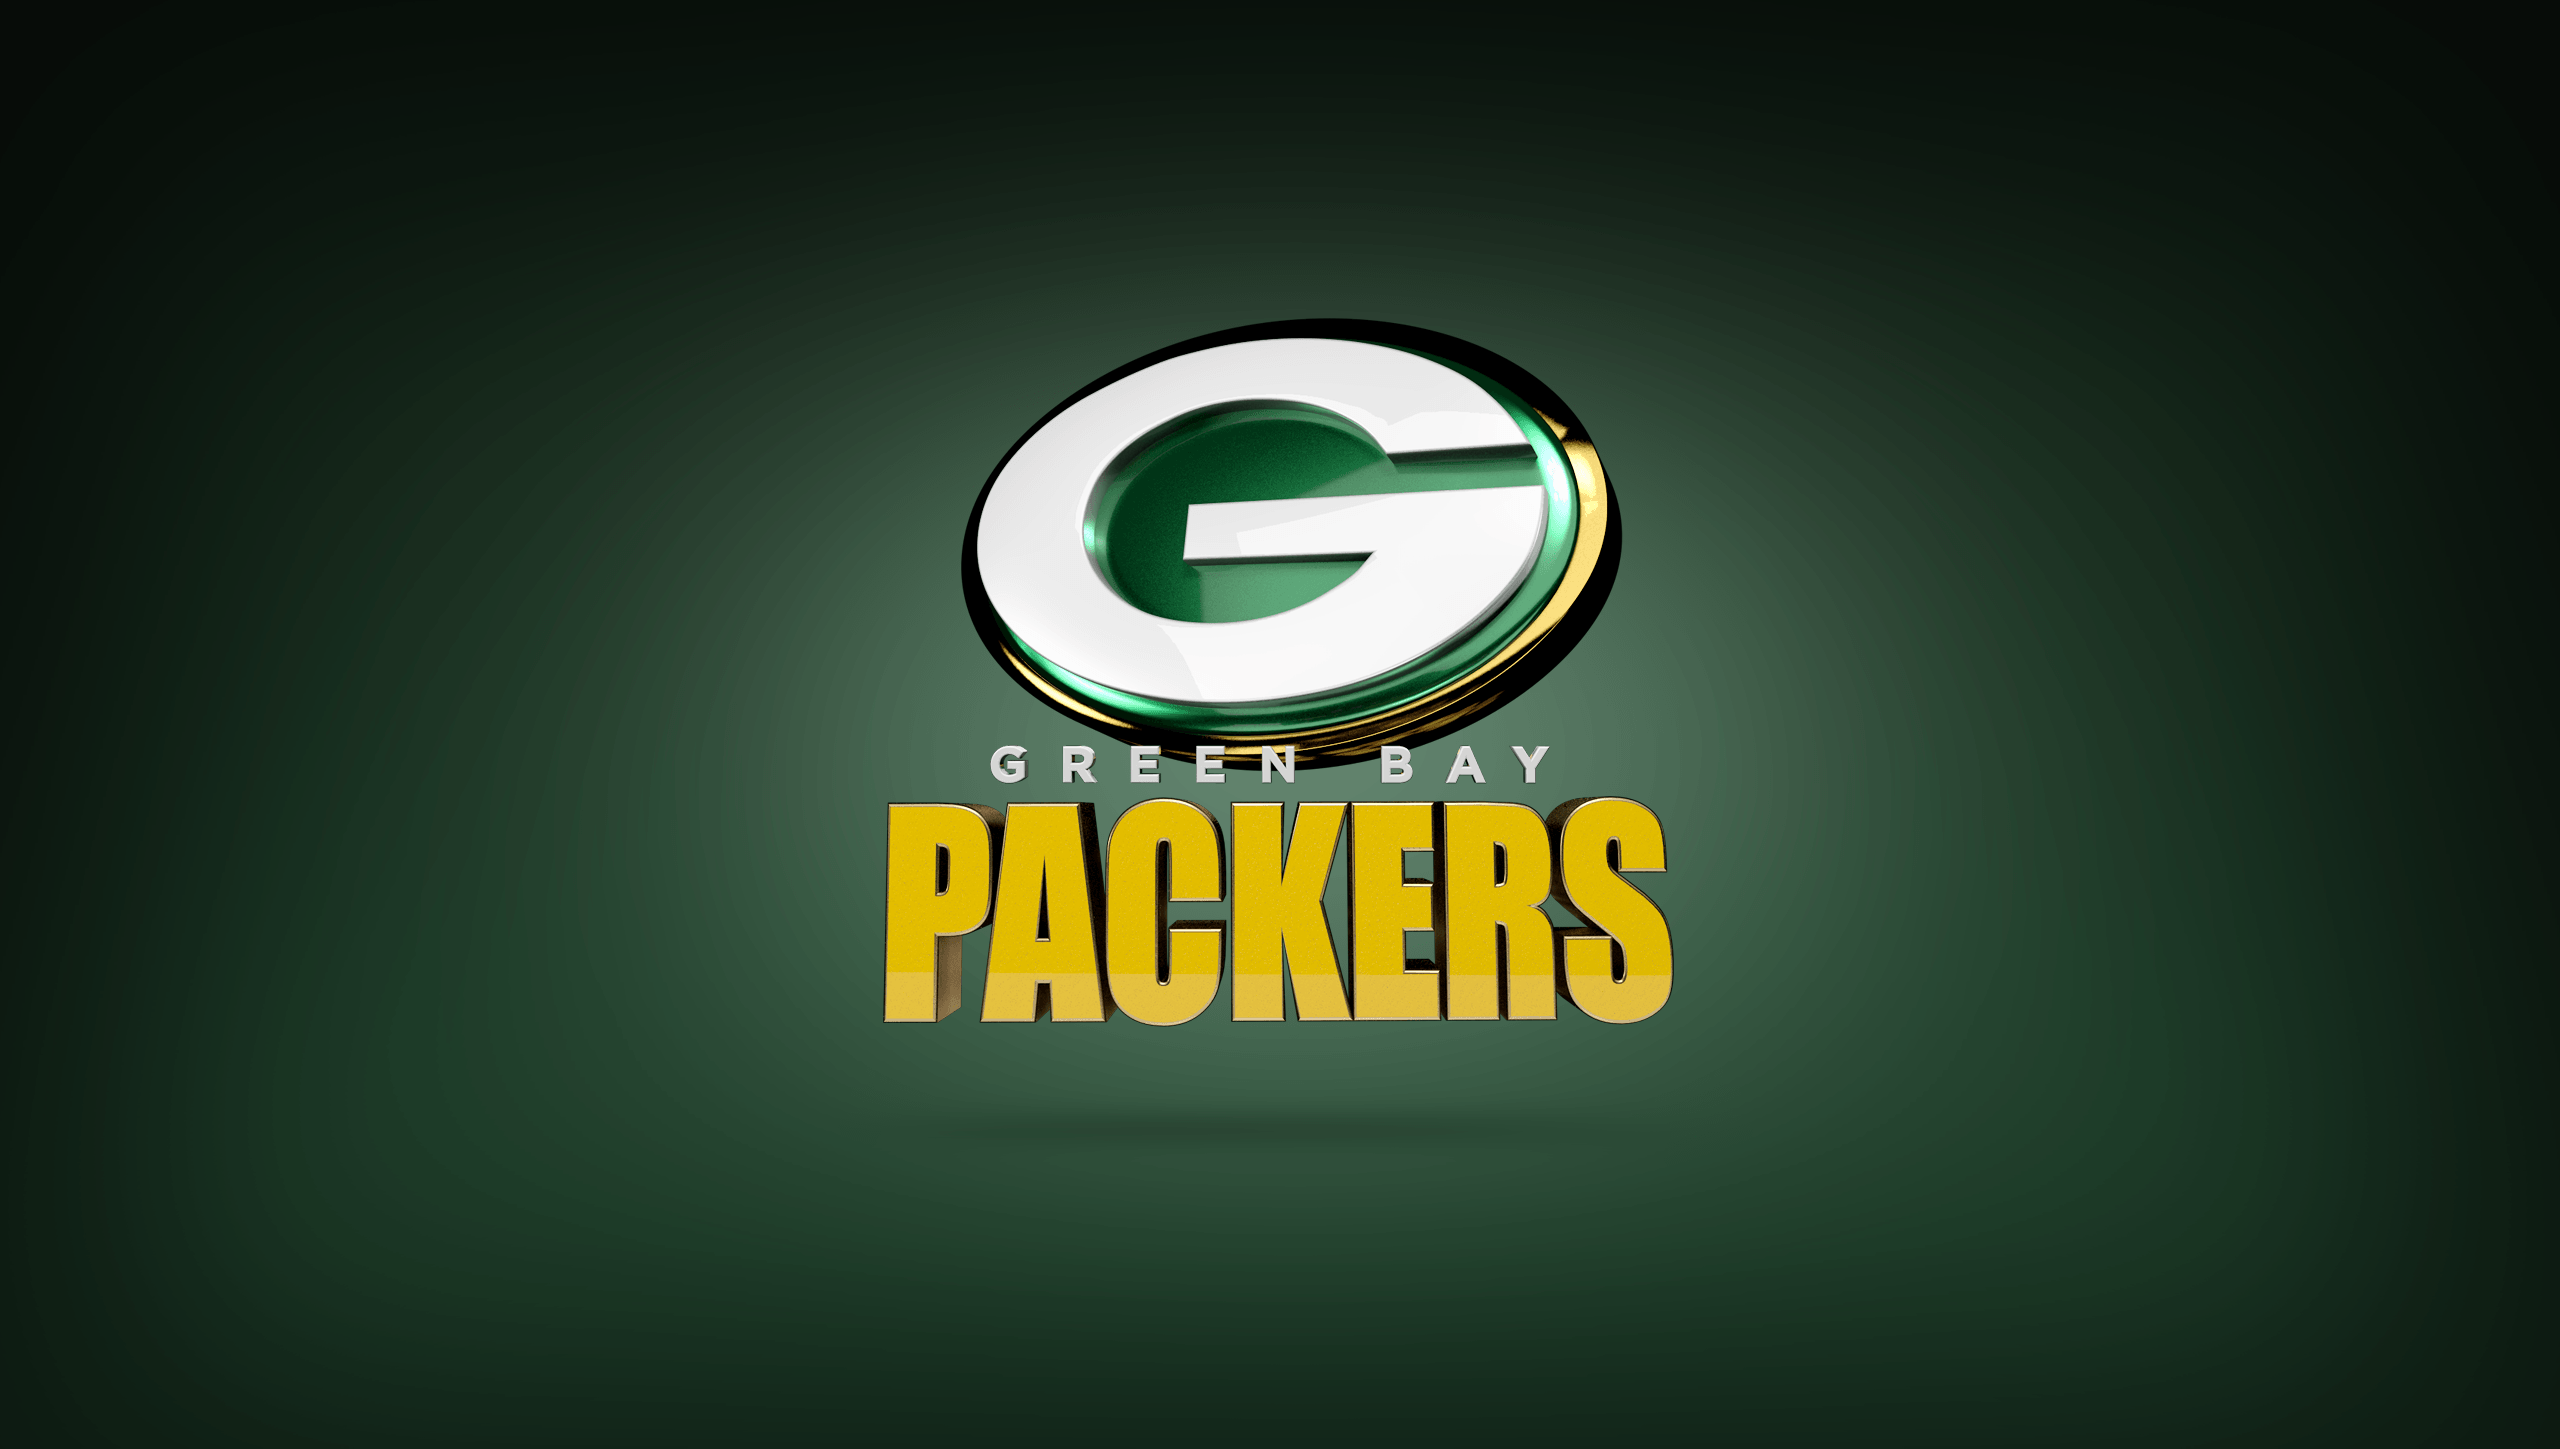 Green Bay Packers Wallpaper. eBay